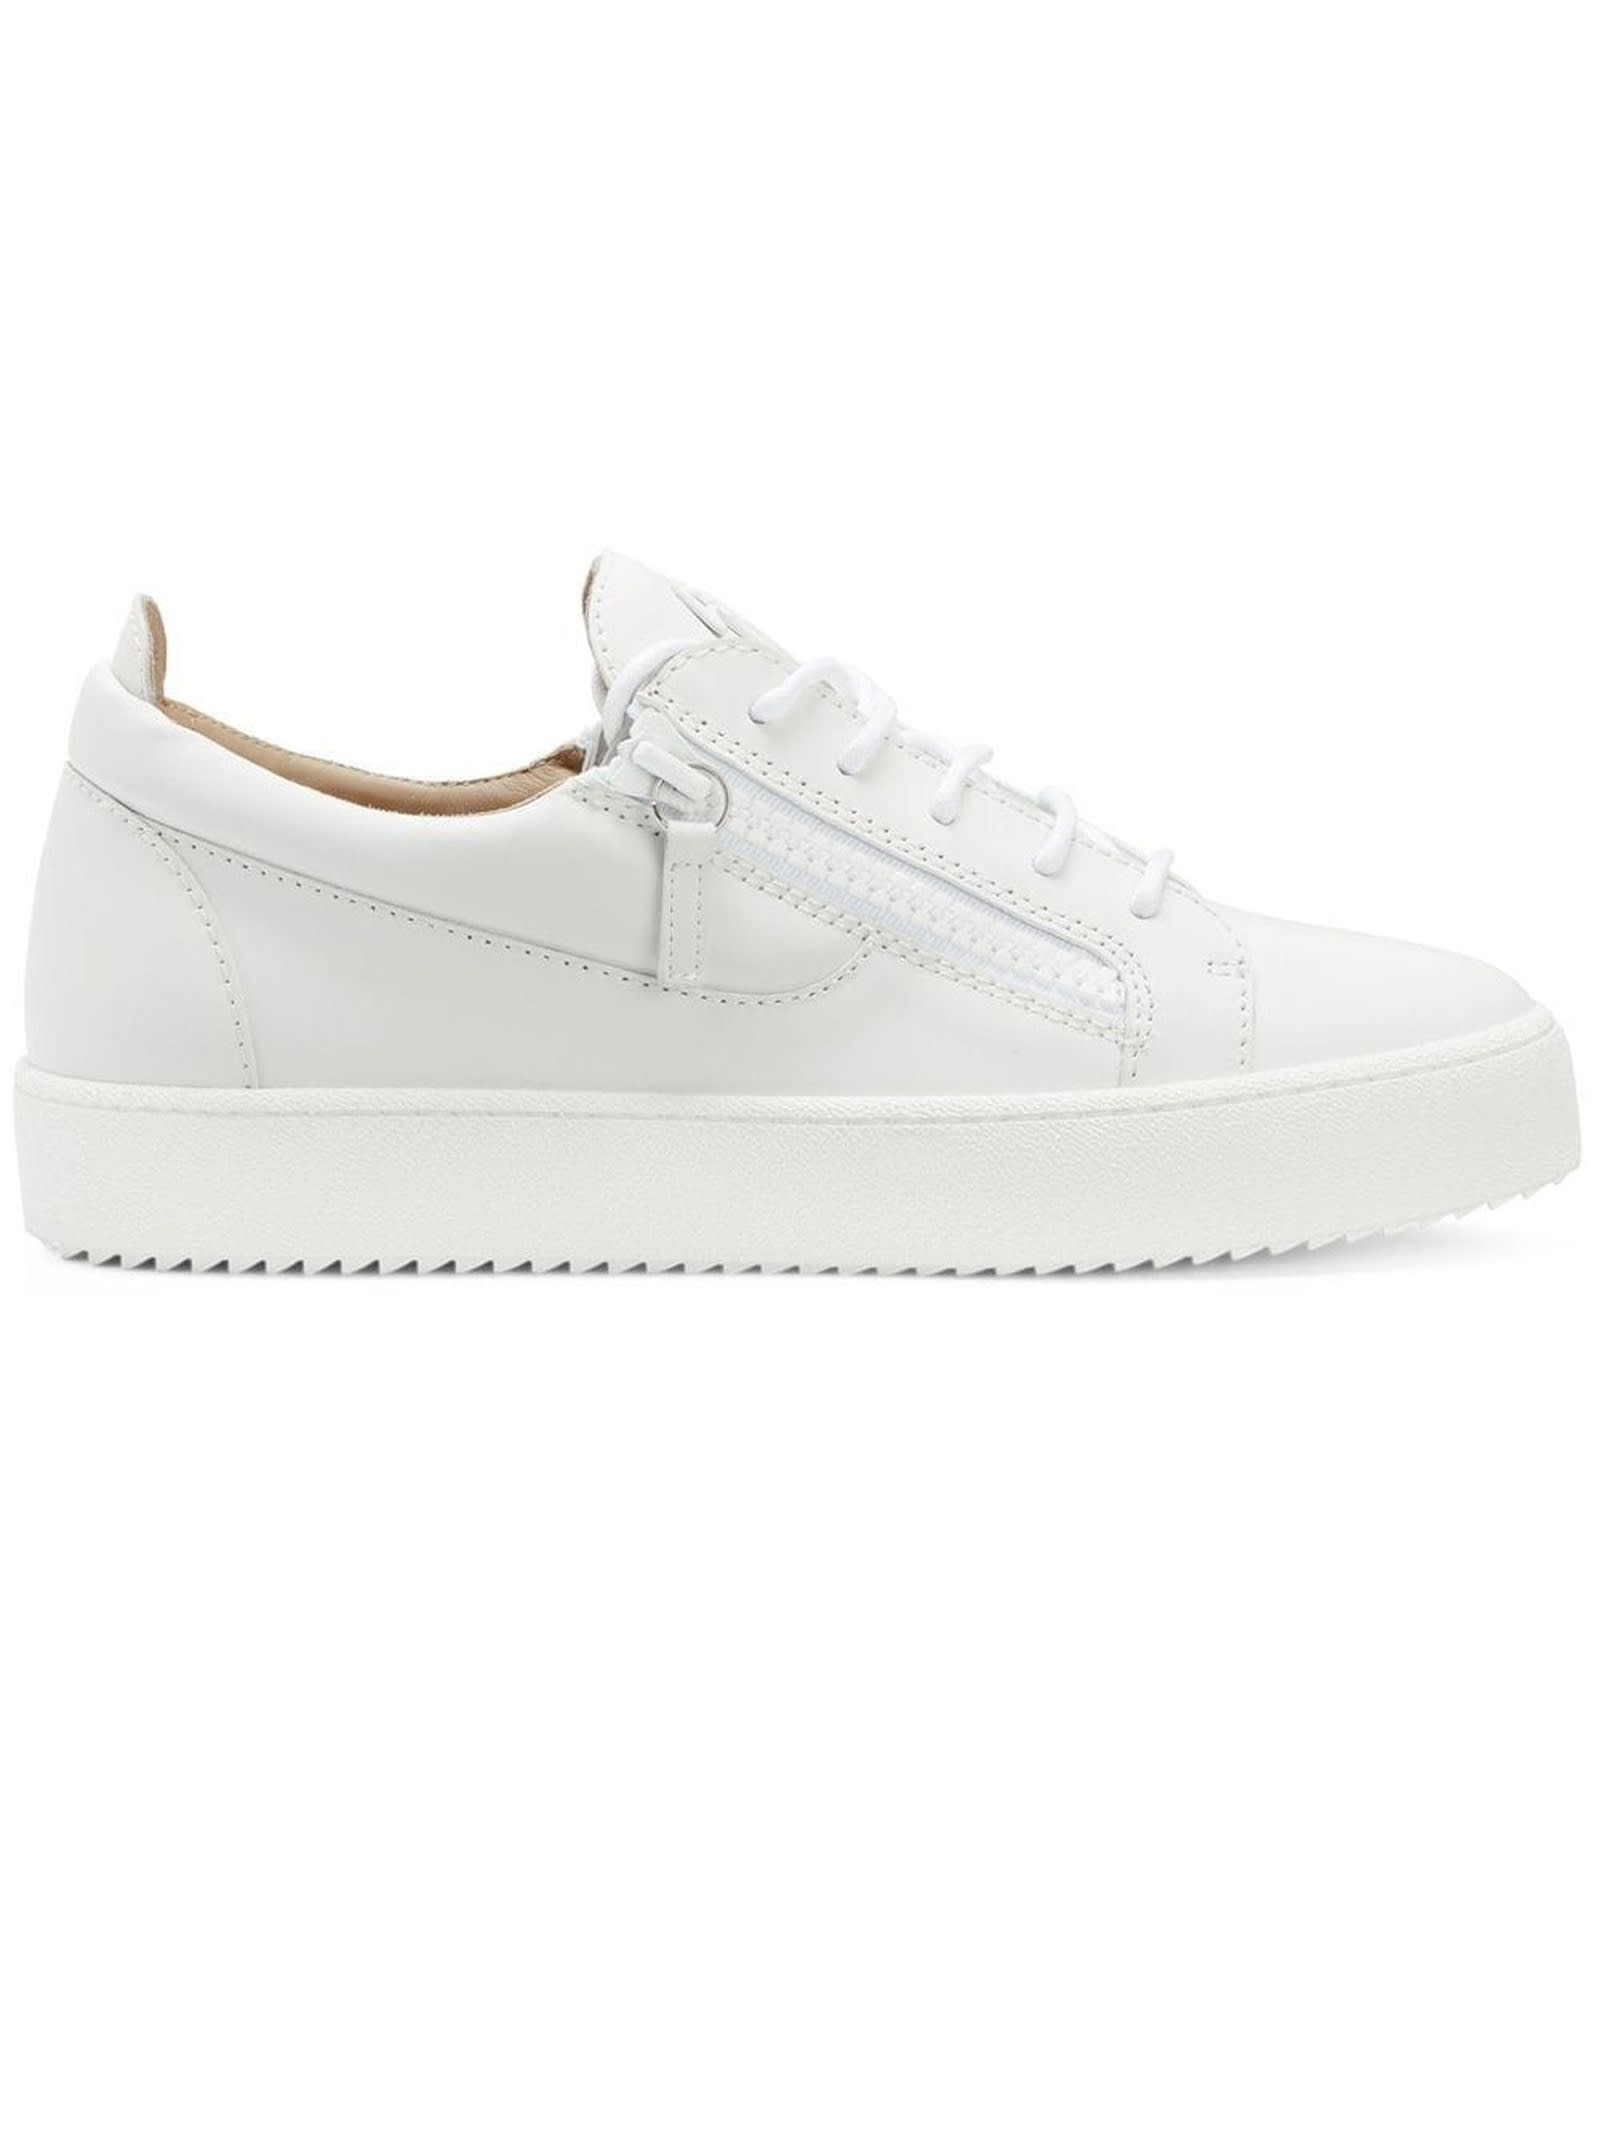 Giuseppe Zanotti White Rubberised Leather Frankie Sneakers